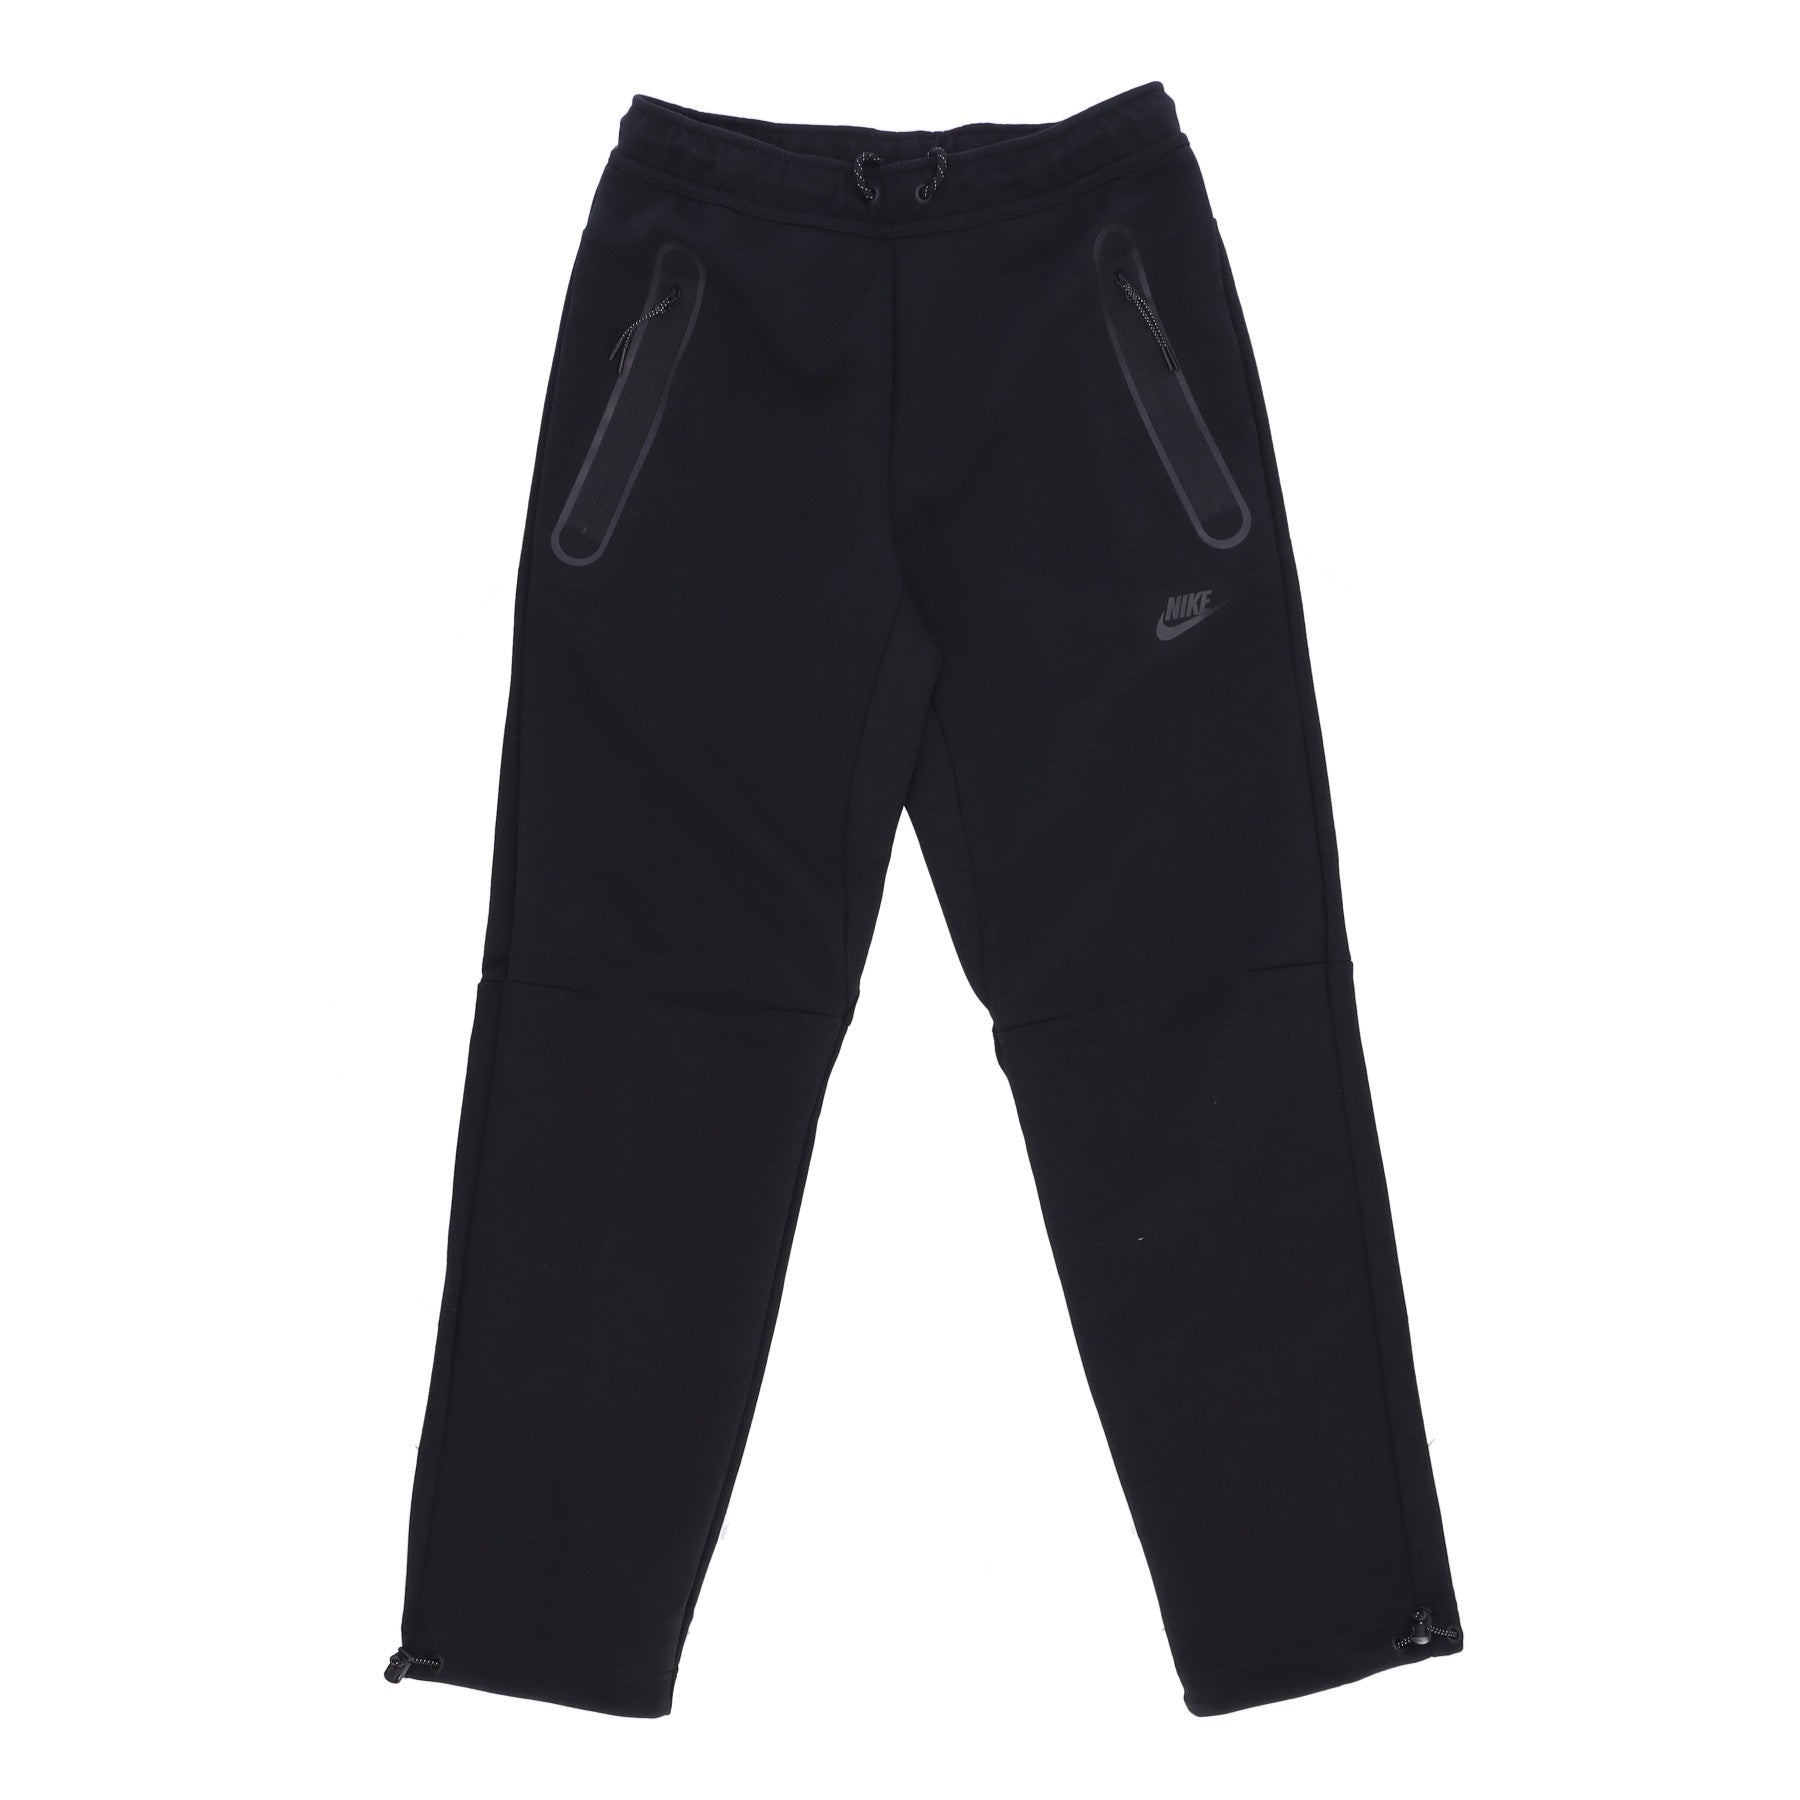 Nike, Pantalone Tuta Leggero Uomo Sportswear Tech Fleece Pant, Black/black